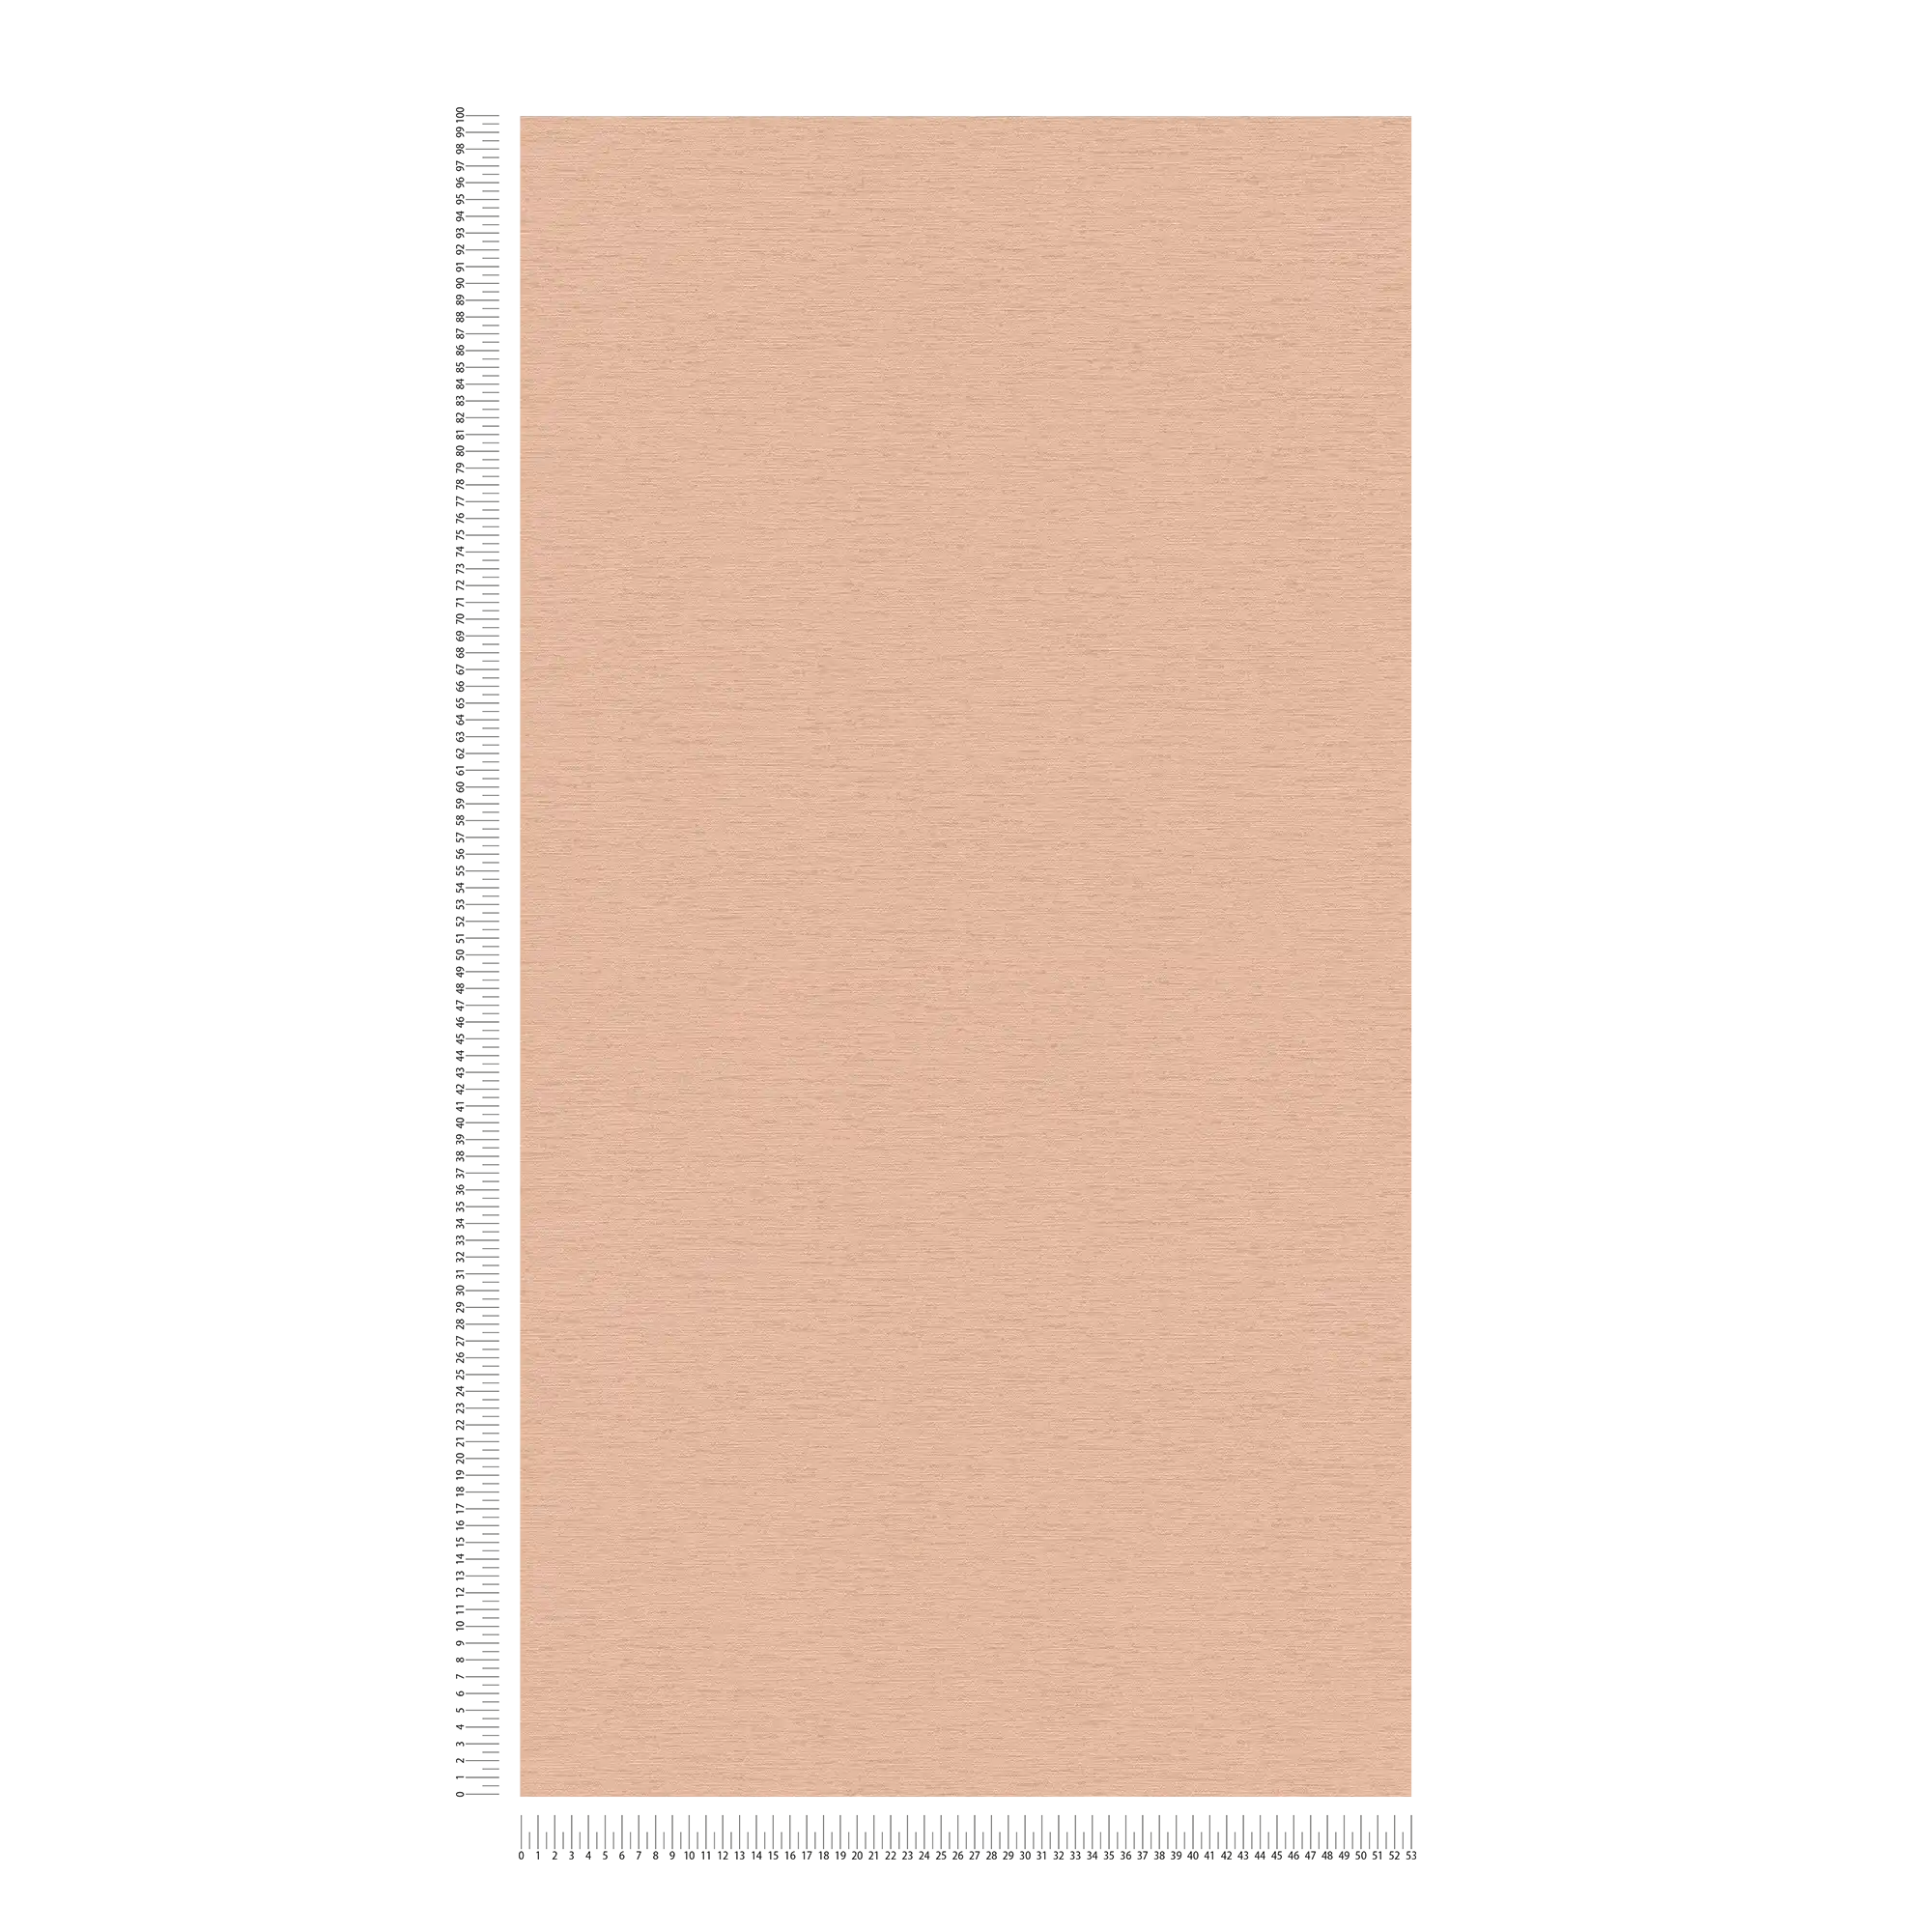             Wallpaper plain with textile structure, matt - pink
        